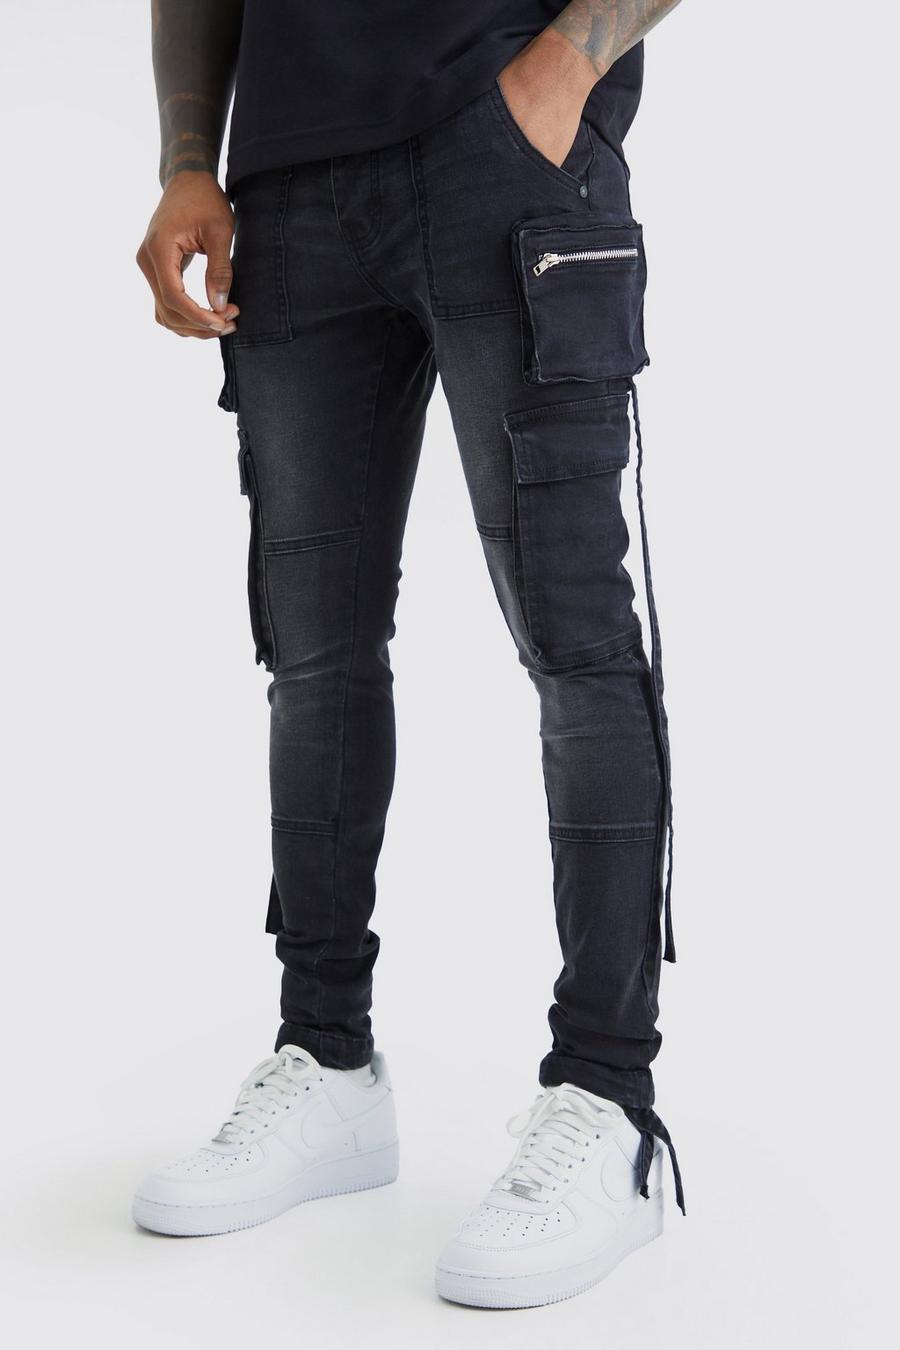 J13 stretch slim fit denim jeans